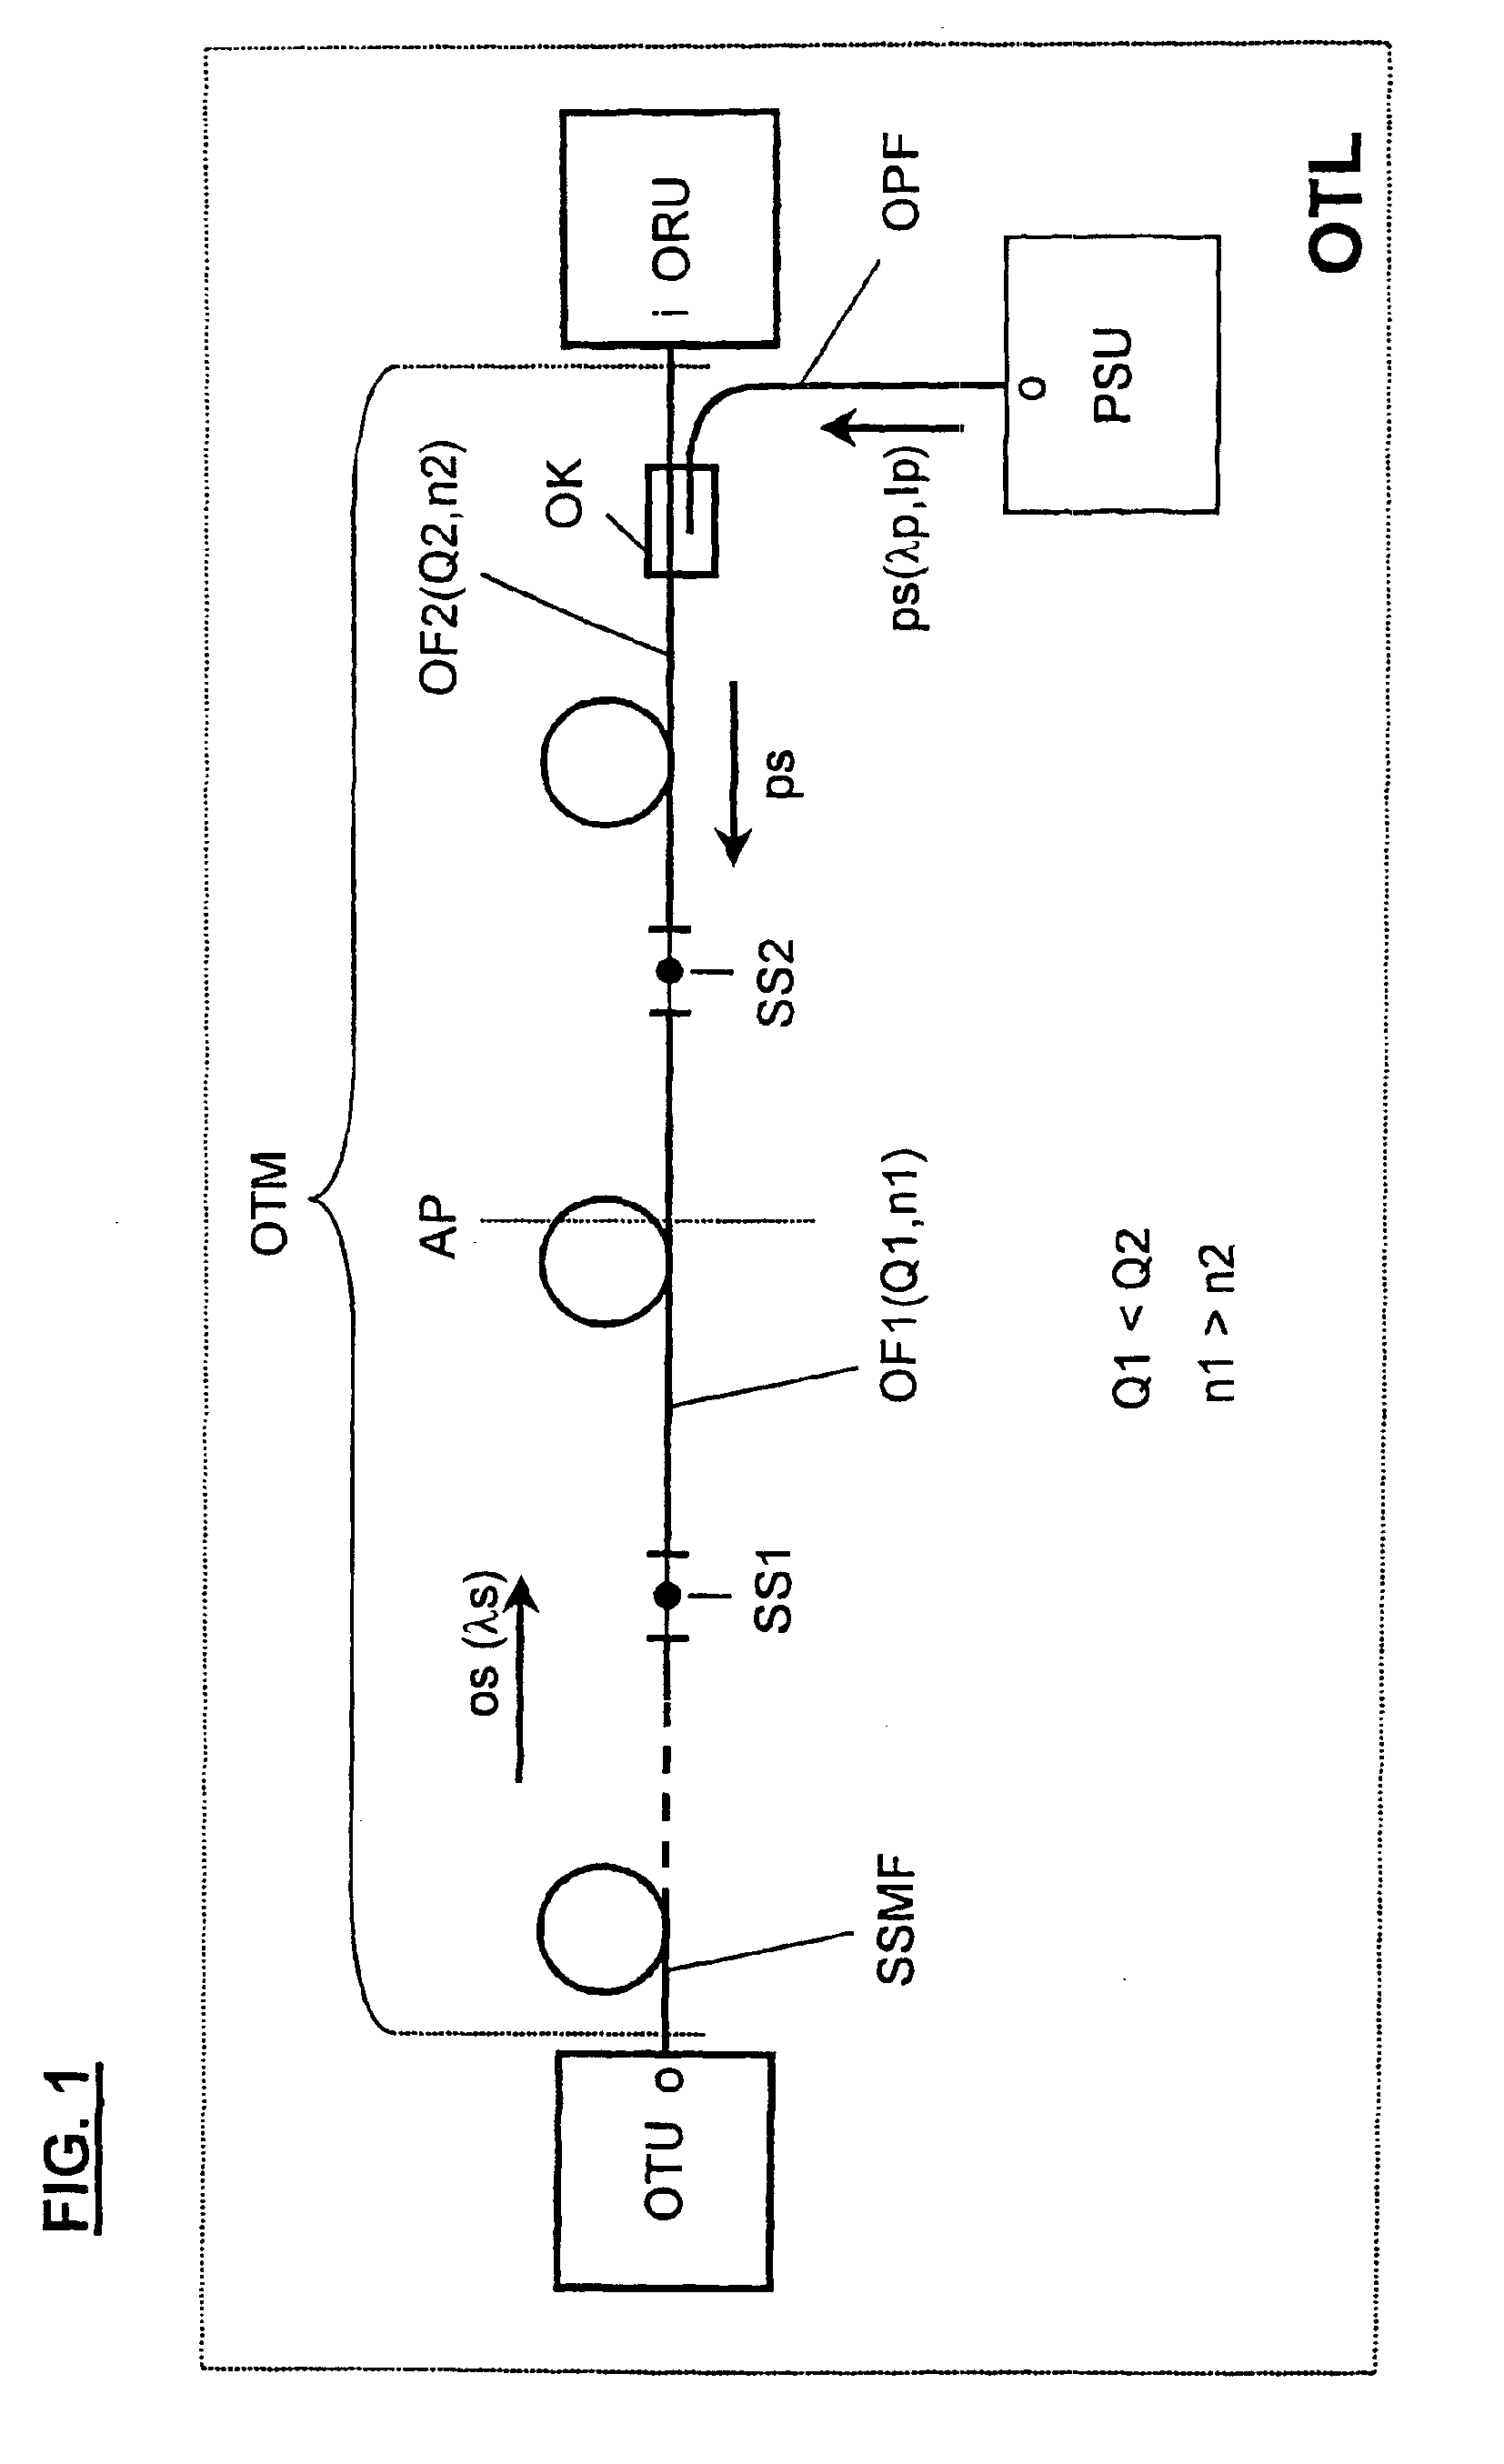 Raman amplifier system